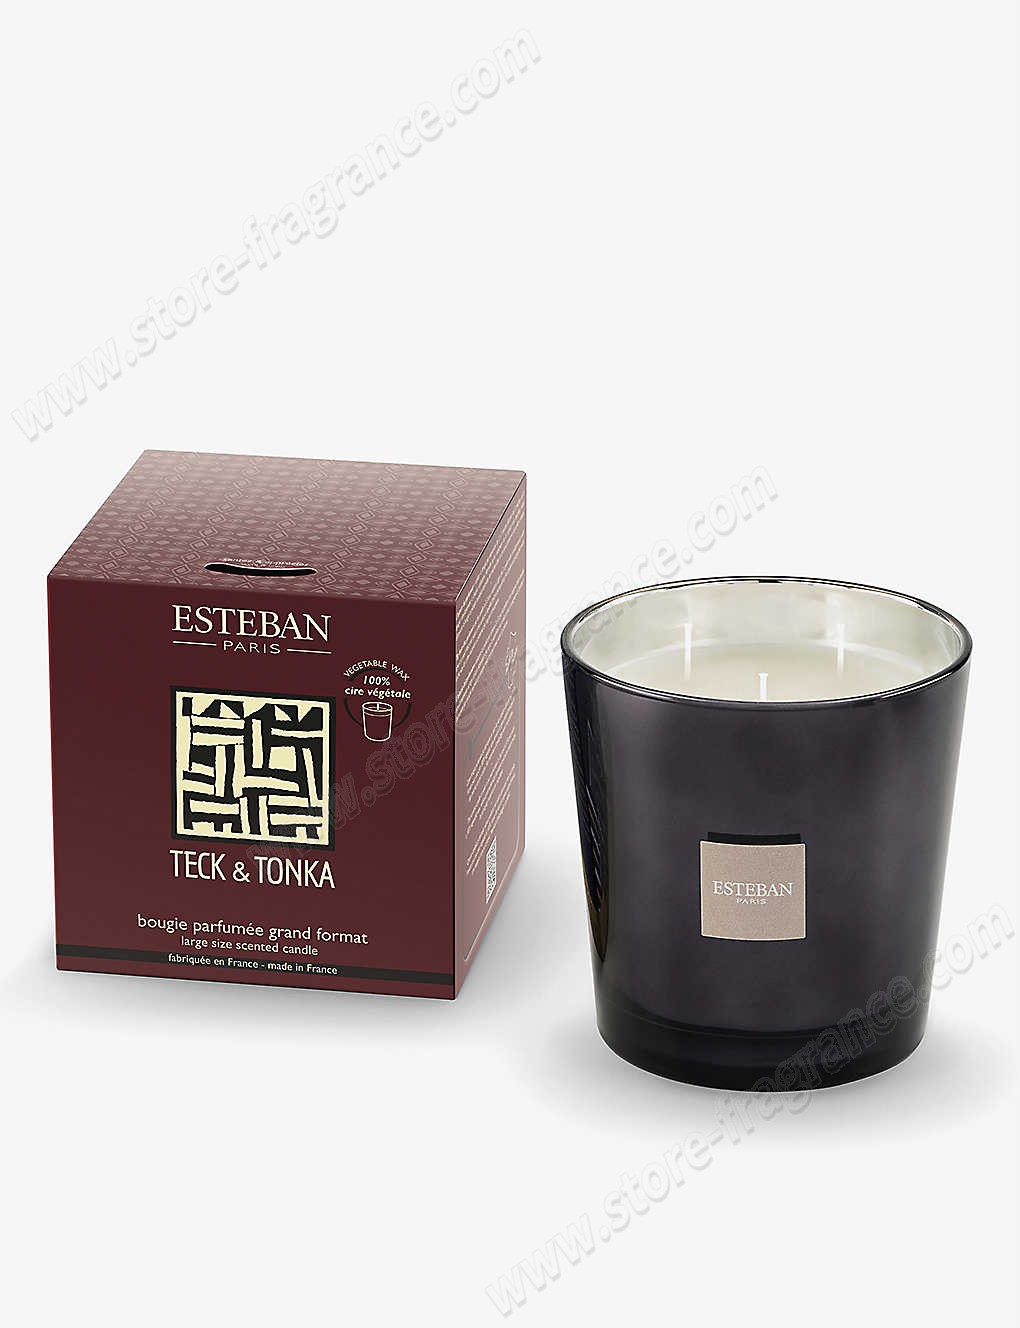 ESTEBAN/Teck & Tonka three-wick scented candle 450g ✿ Discount Store - ESTEBAN/Teck & Tonka three-wick scented candle 450g ✿ Discount Store